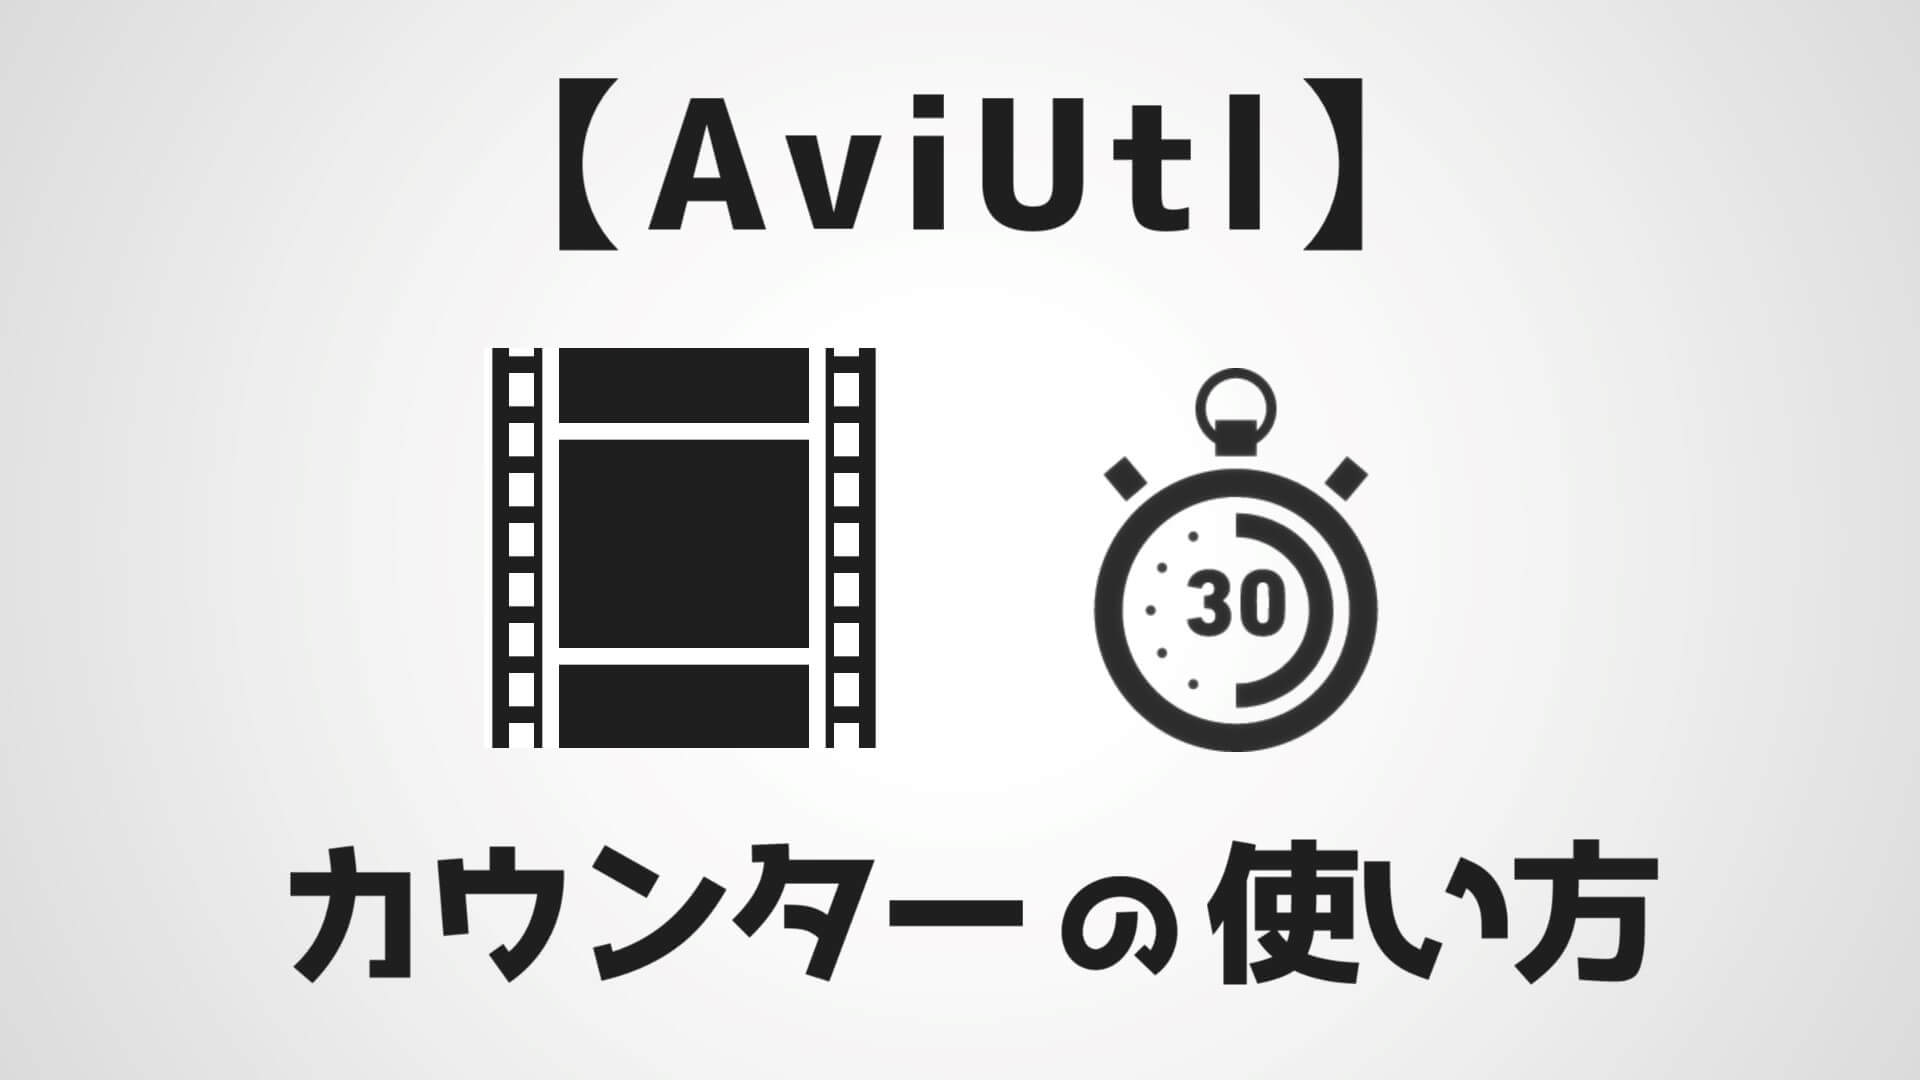 Aviutl タイマー カウンター の作り方 再生 止め方 一時停止をわかりやすく解説 Aketama Official Blog